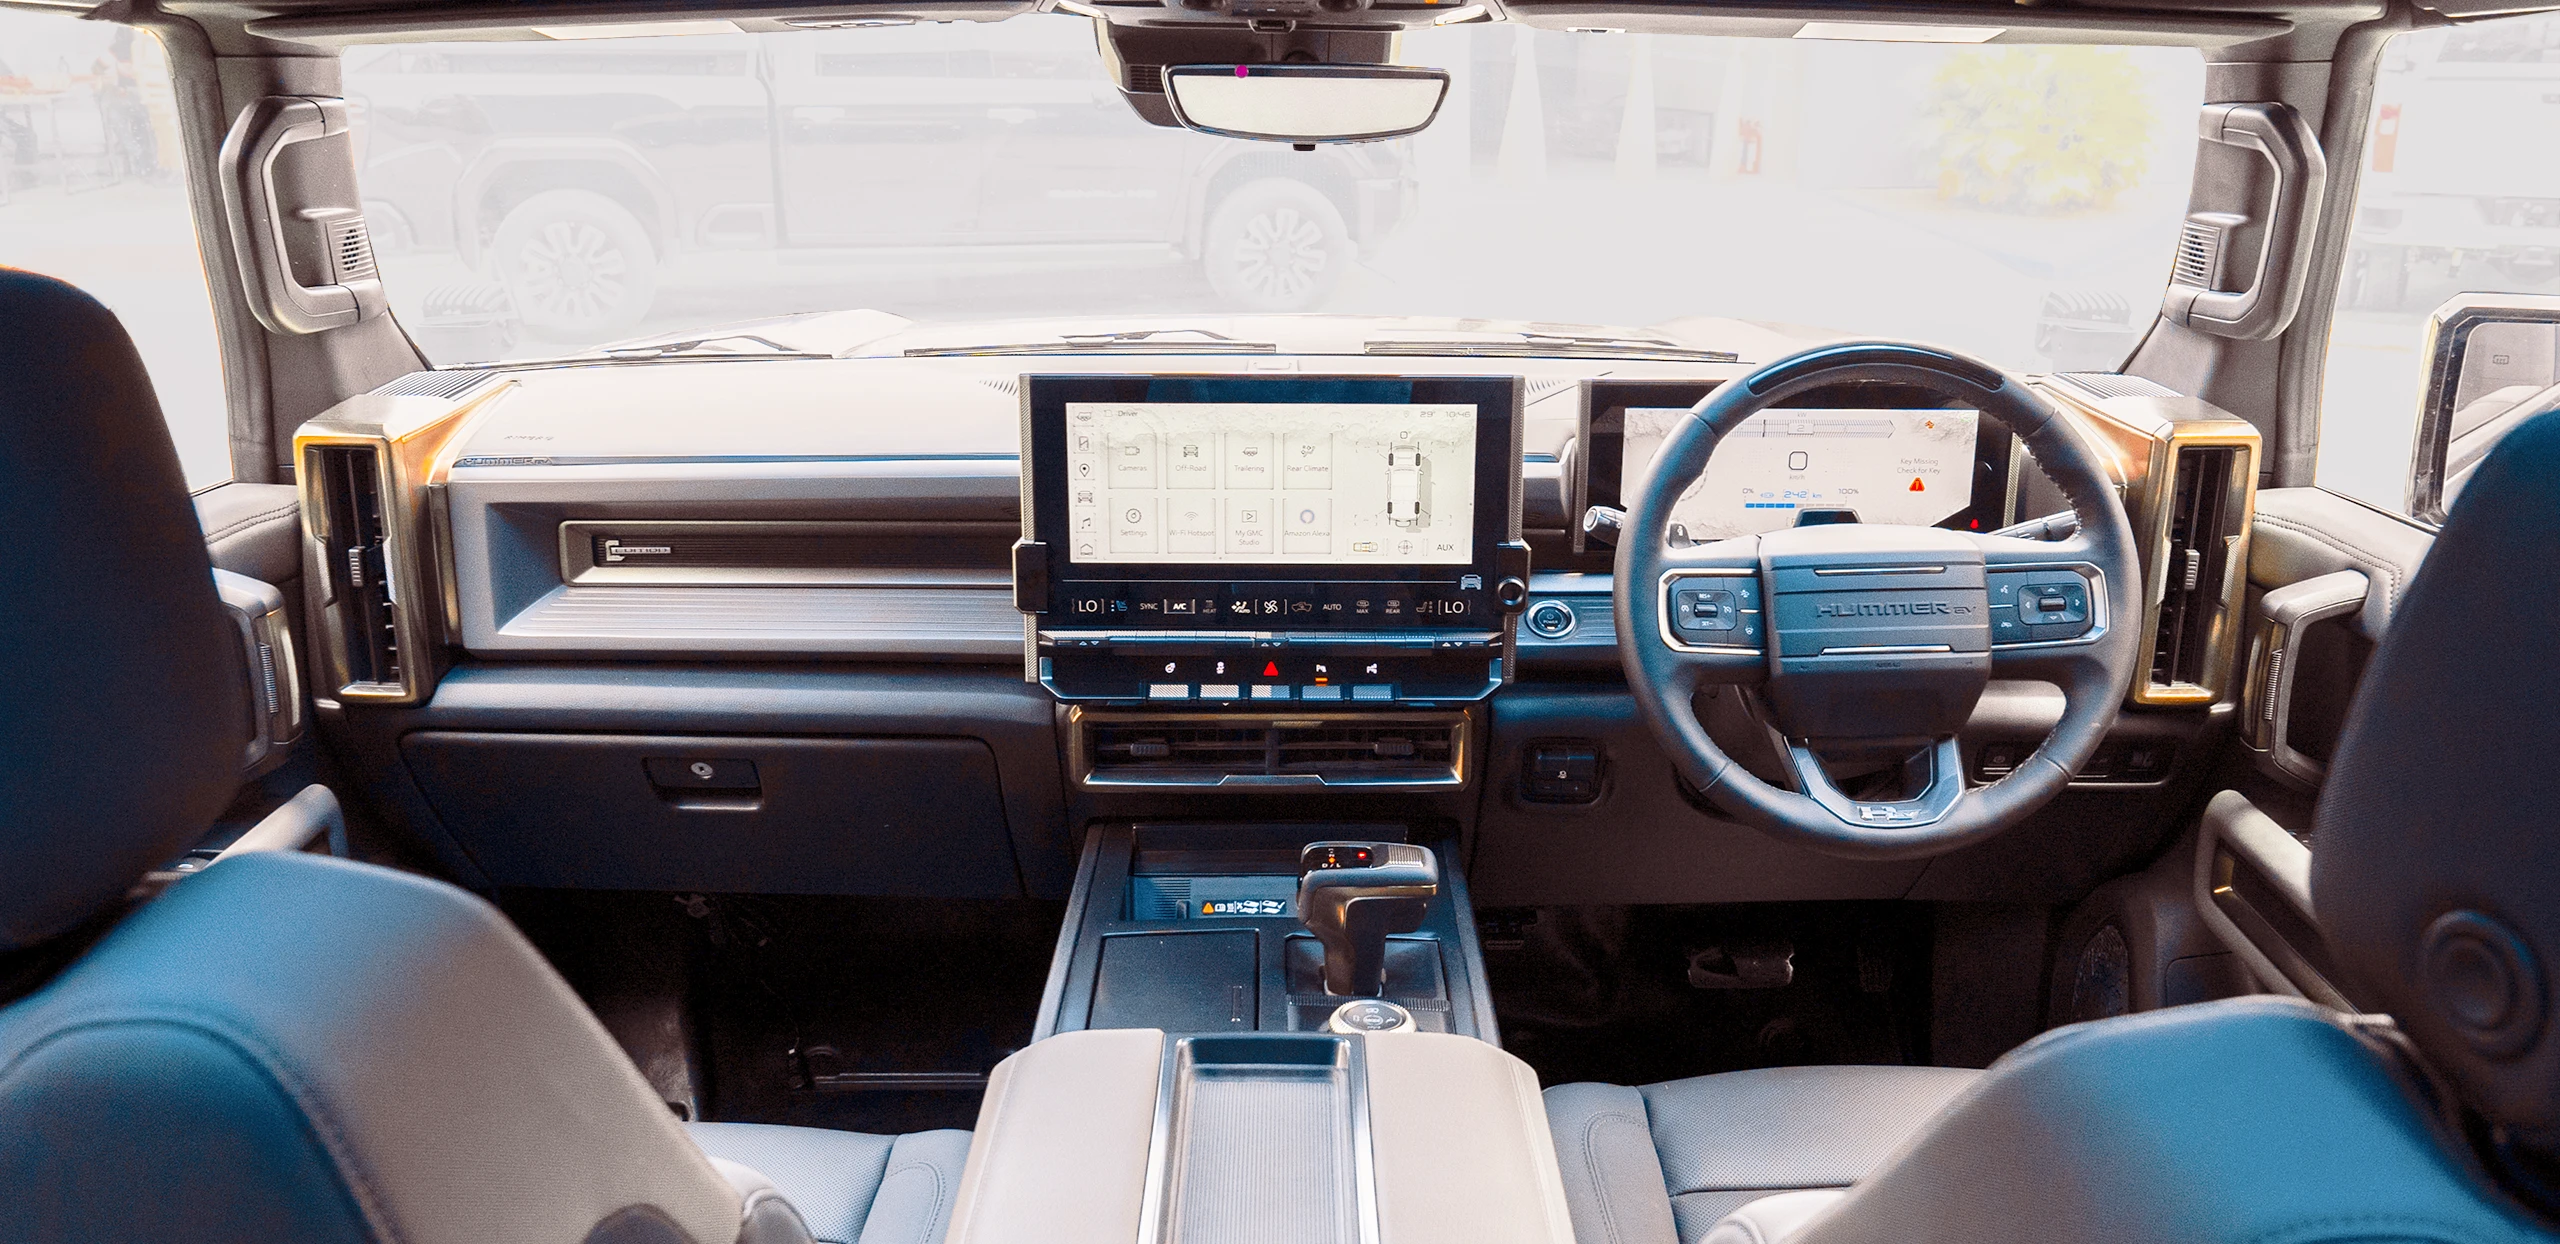 GMC Hummer EV Edition One Interior Dashboard world first right hand drive conversion